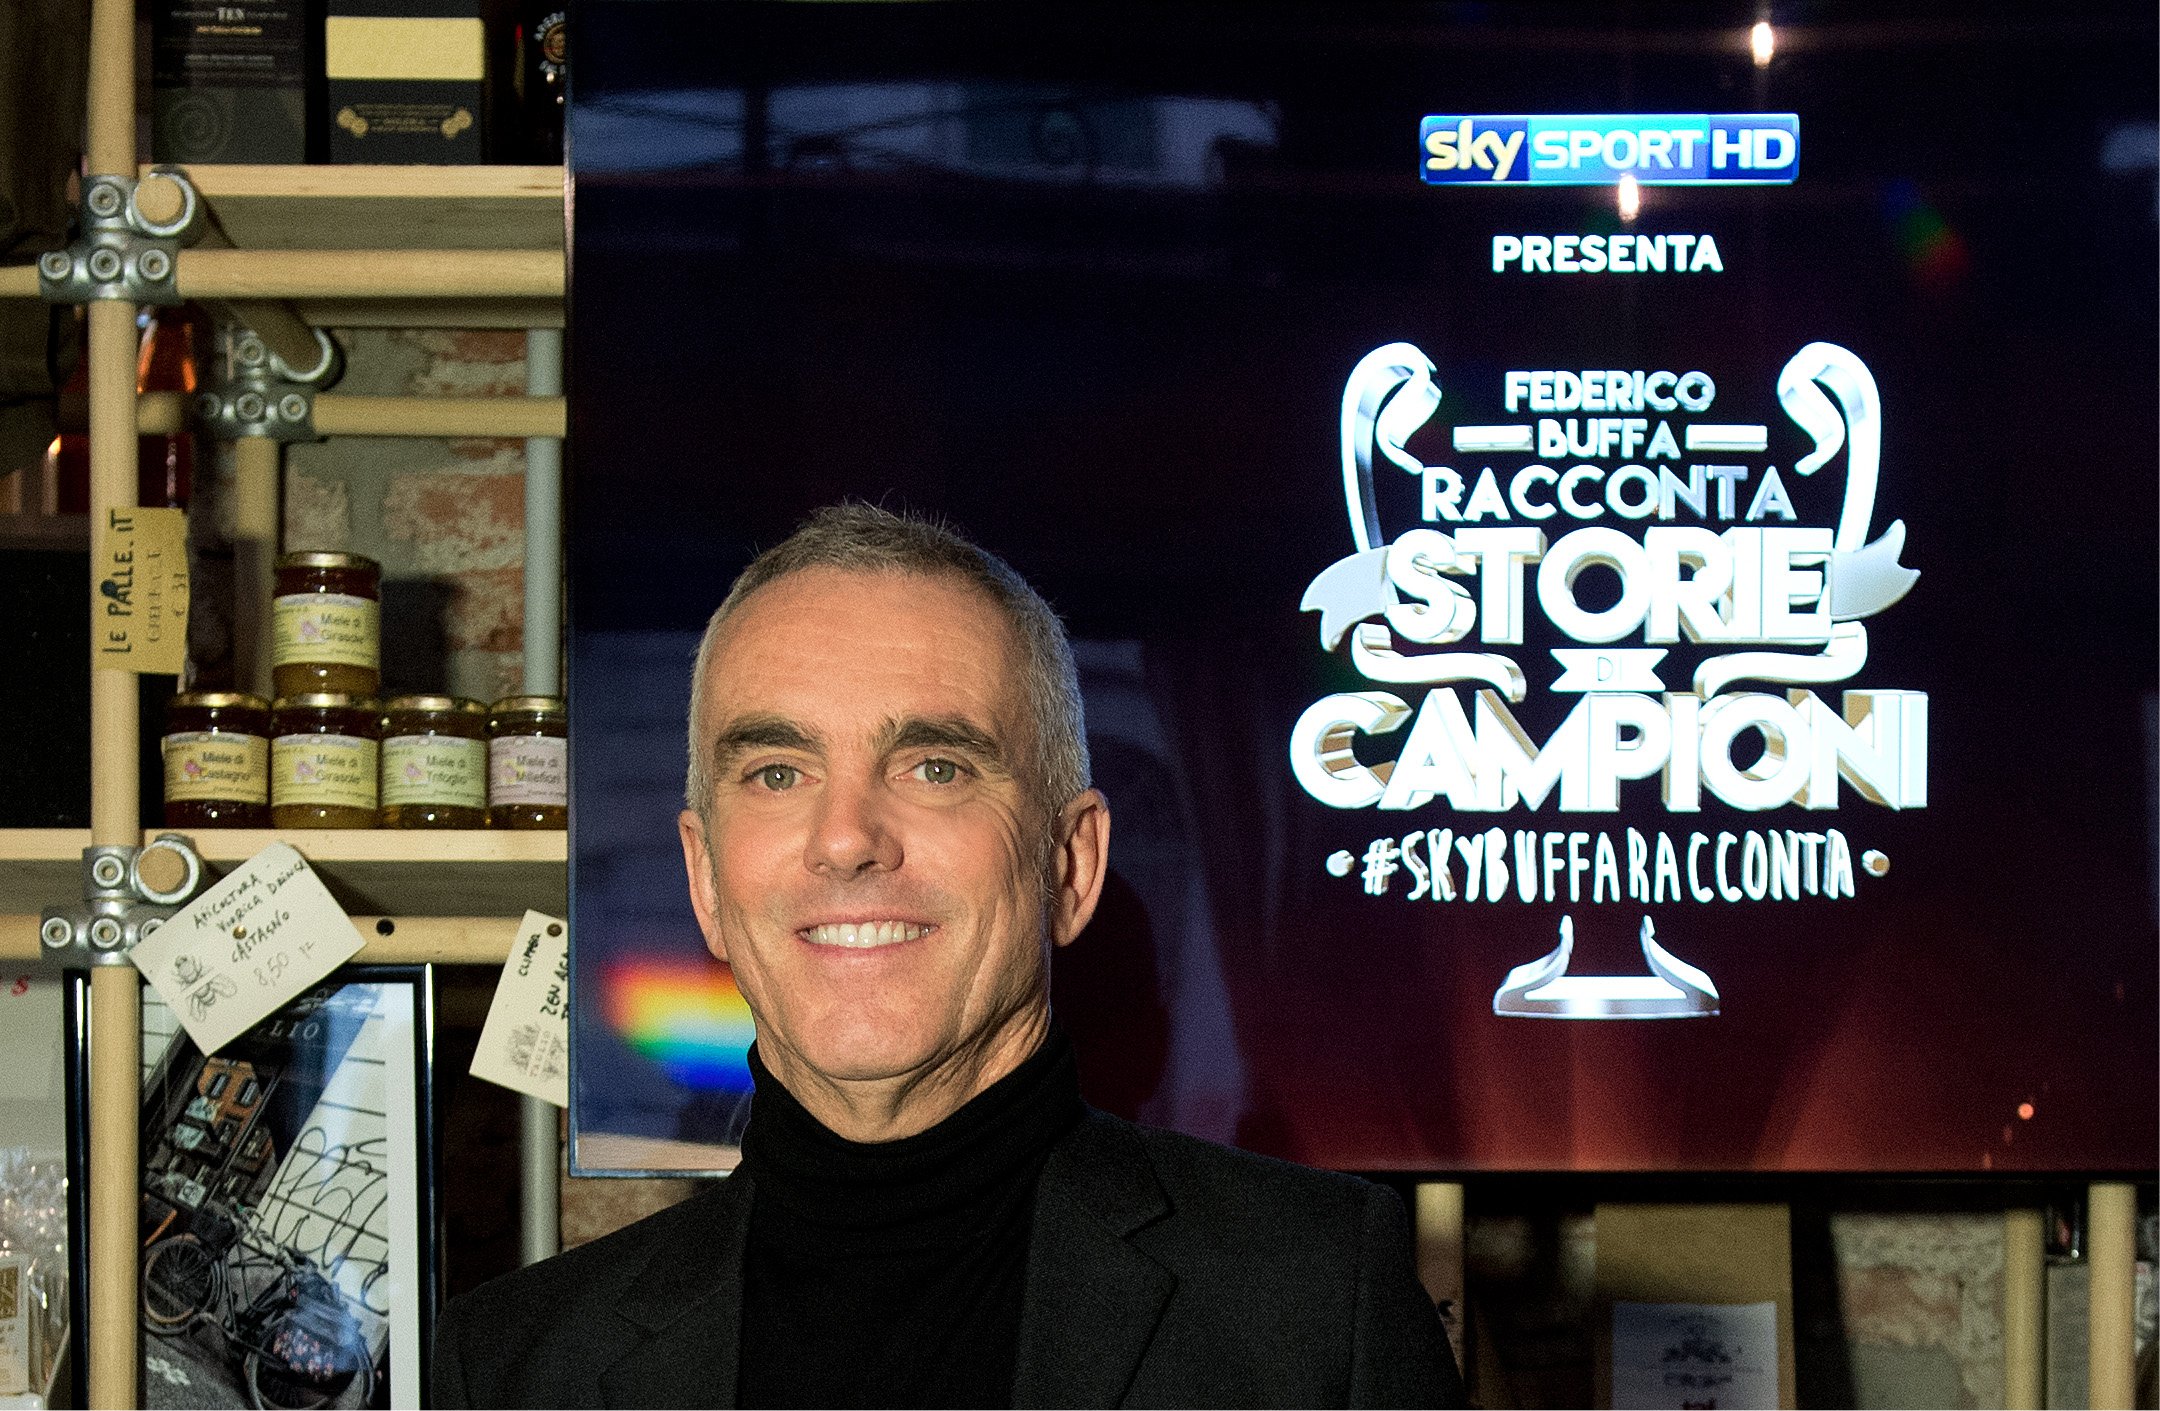 Federico Buffa in esclusiva su Sky Sport racconta i Campioni #SkyBuffaRacconta